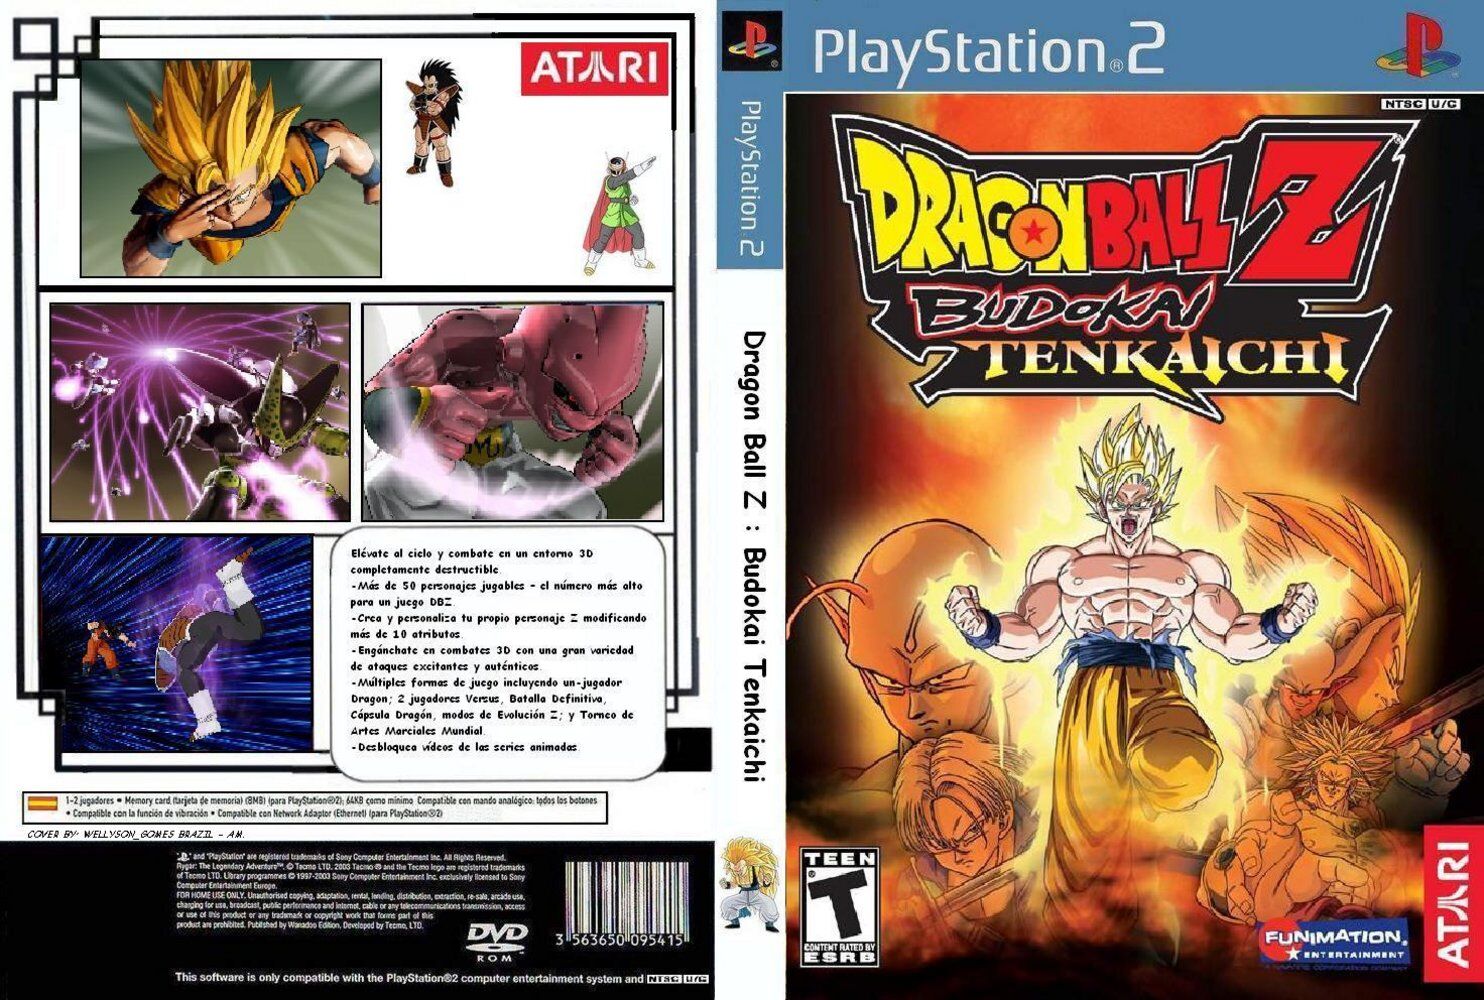 Dragonball Z Budokai Tenkaichi 3 PlayStation 2 PS2 Cover Art ONLY NO GAME  Manual